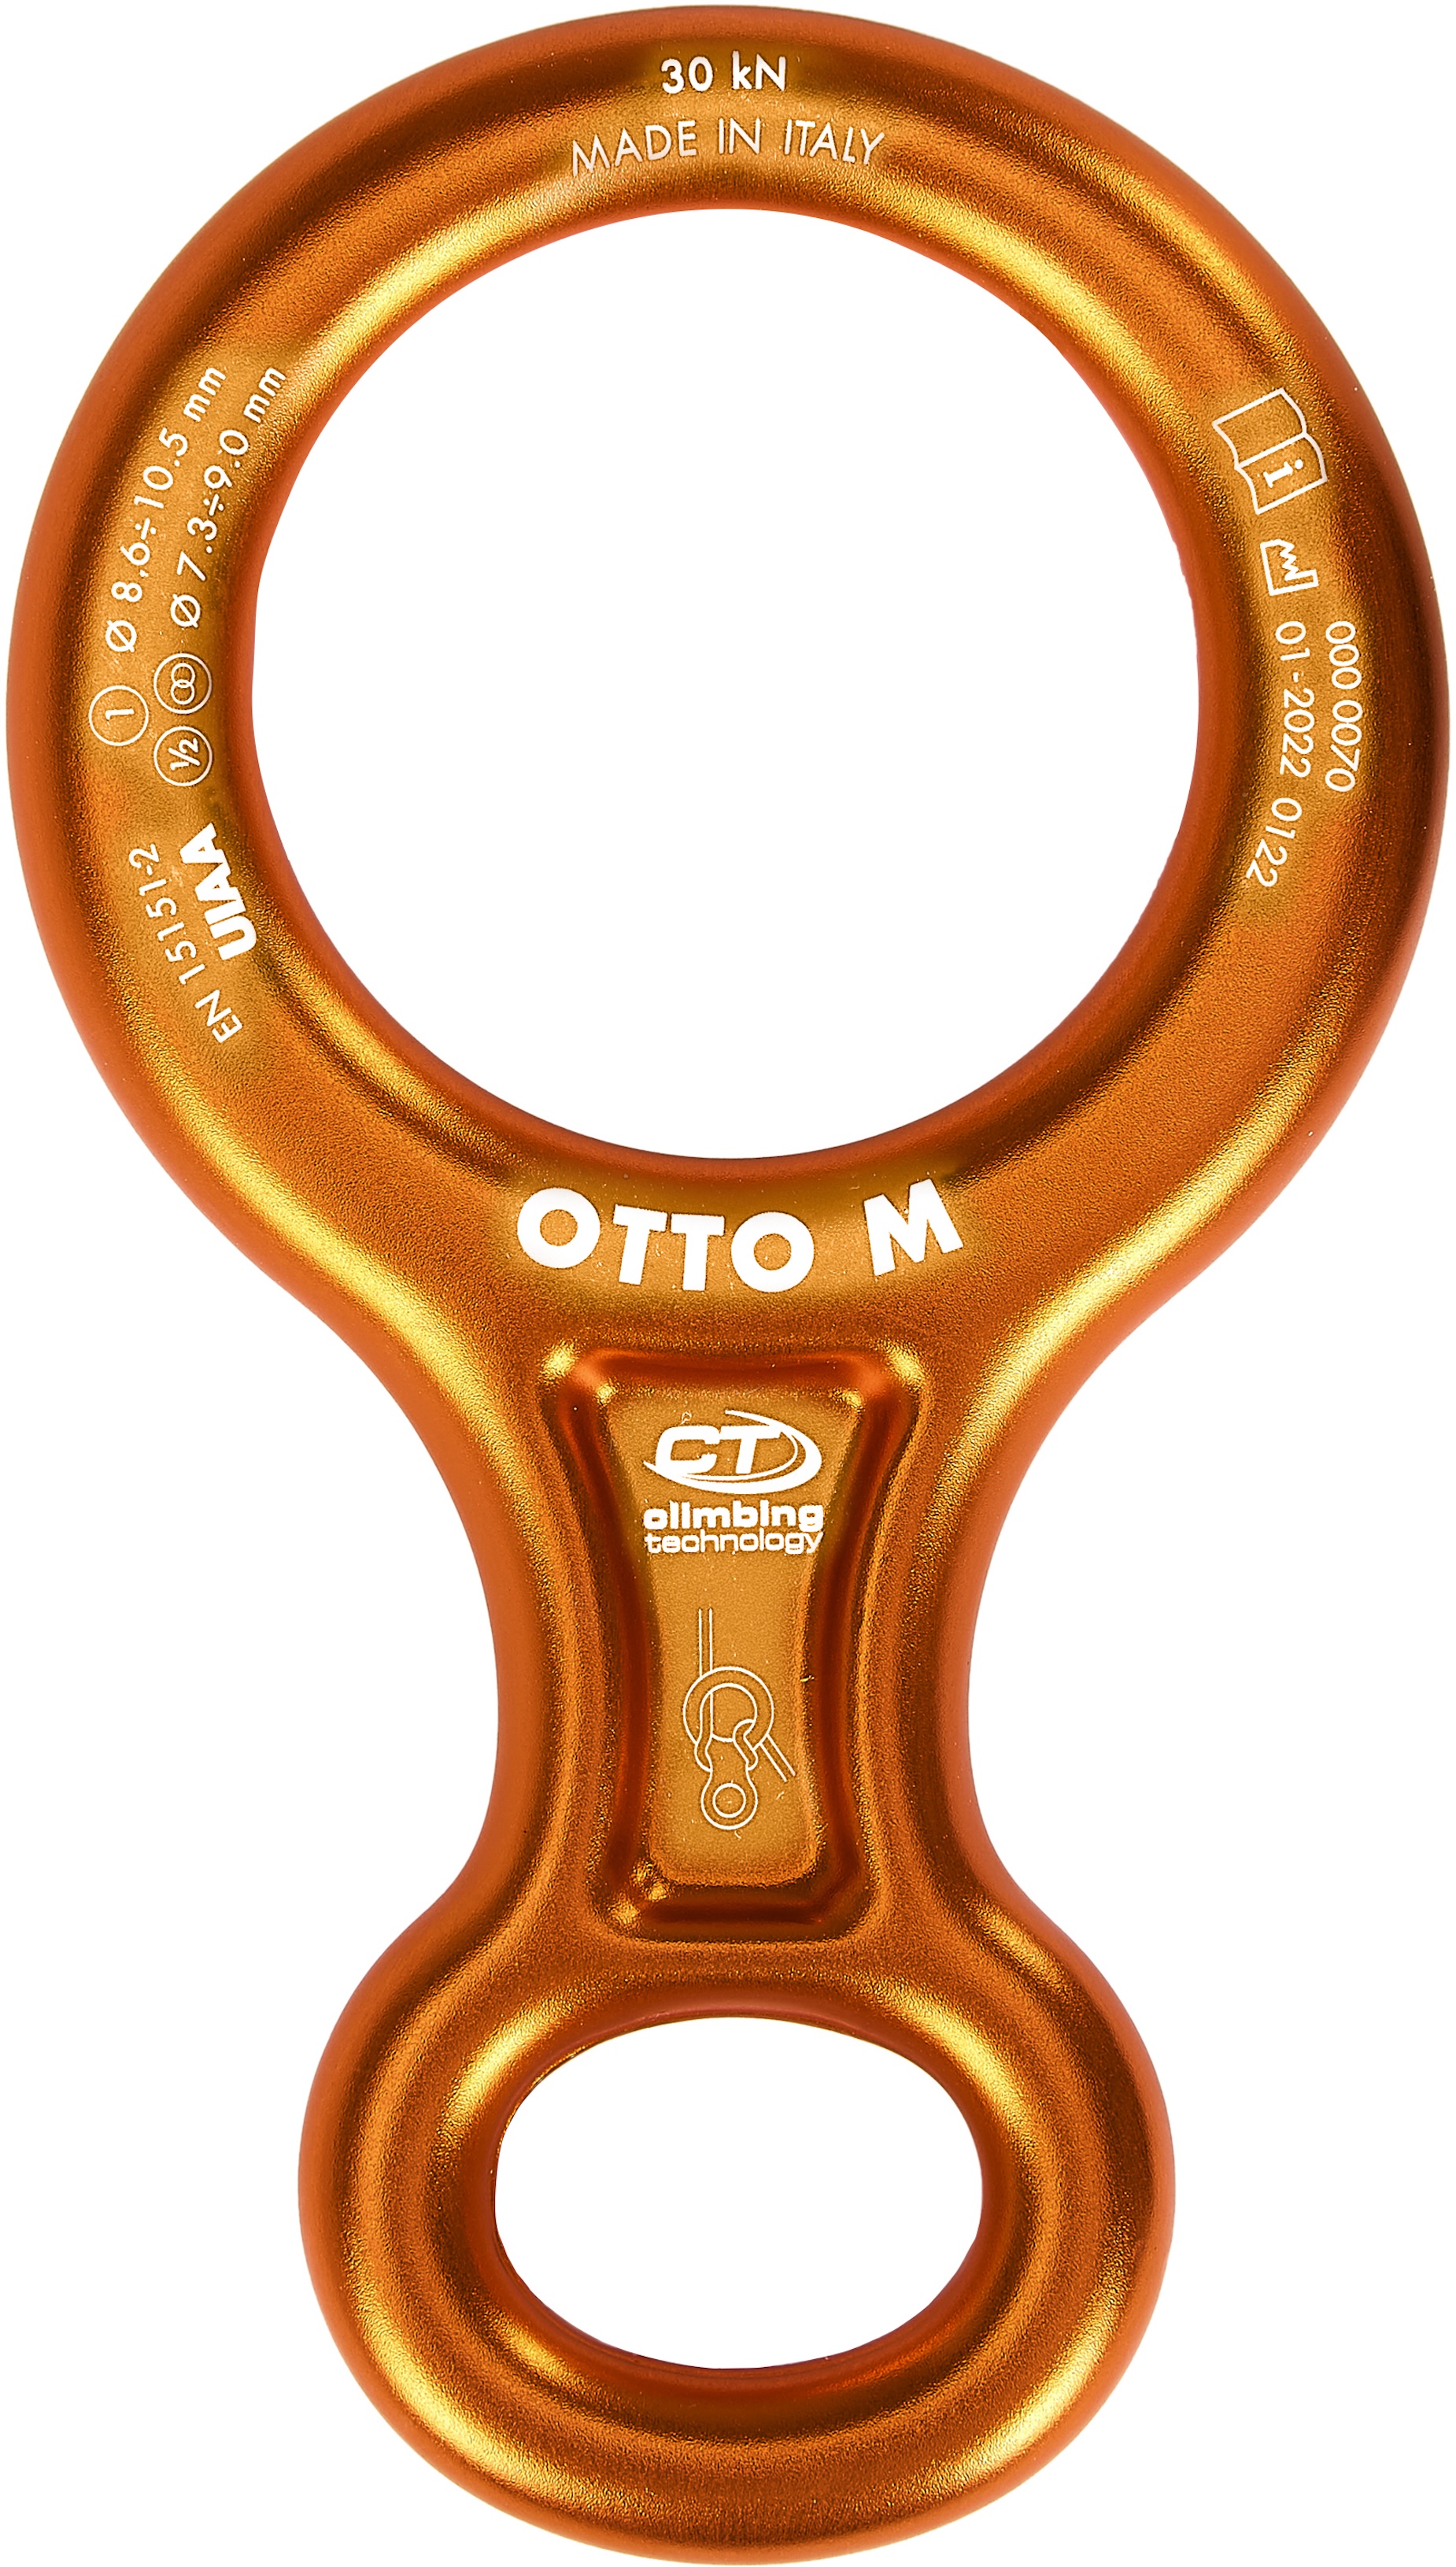 Otto M figure-eight by Climbing Technology